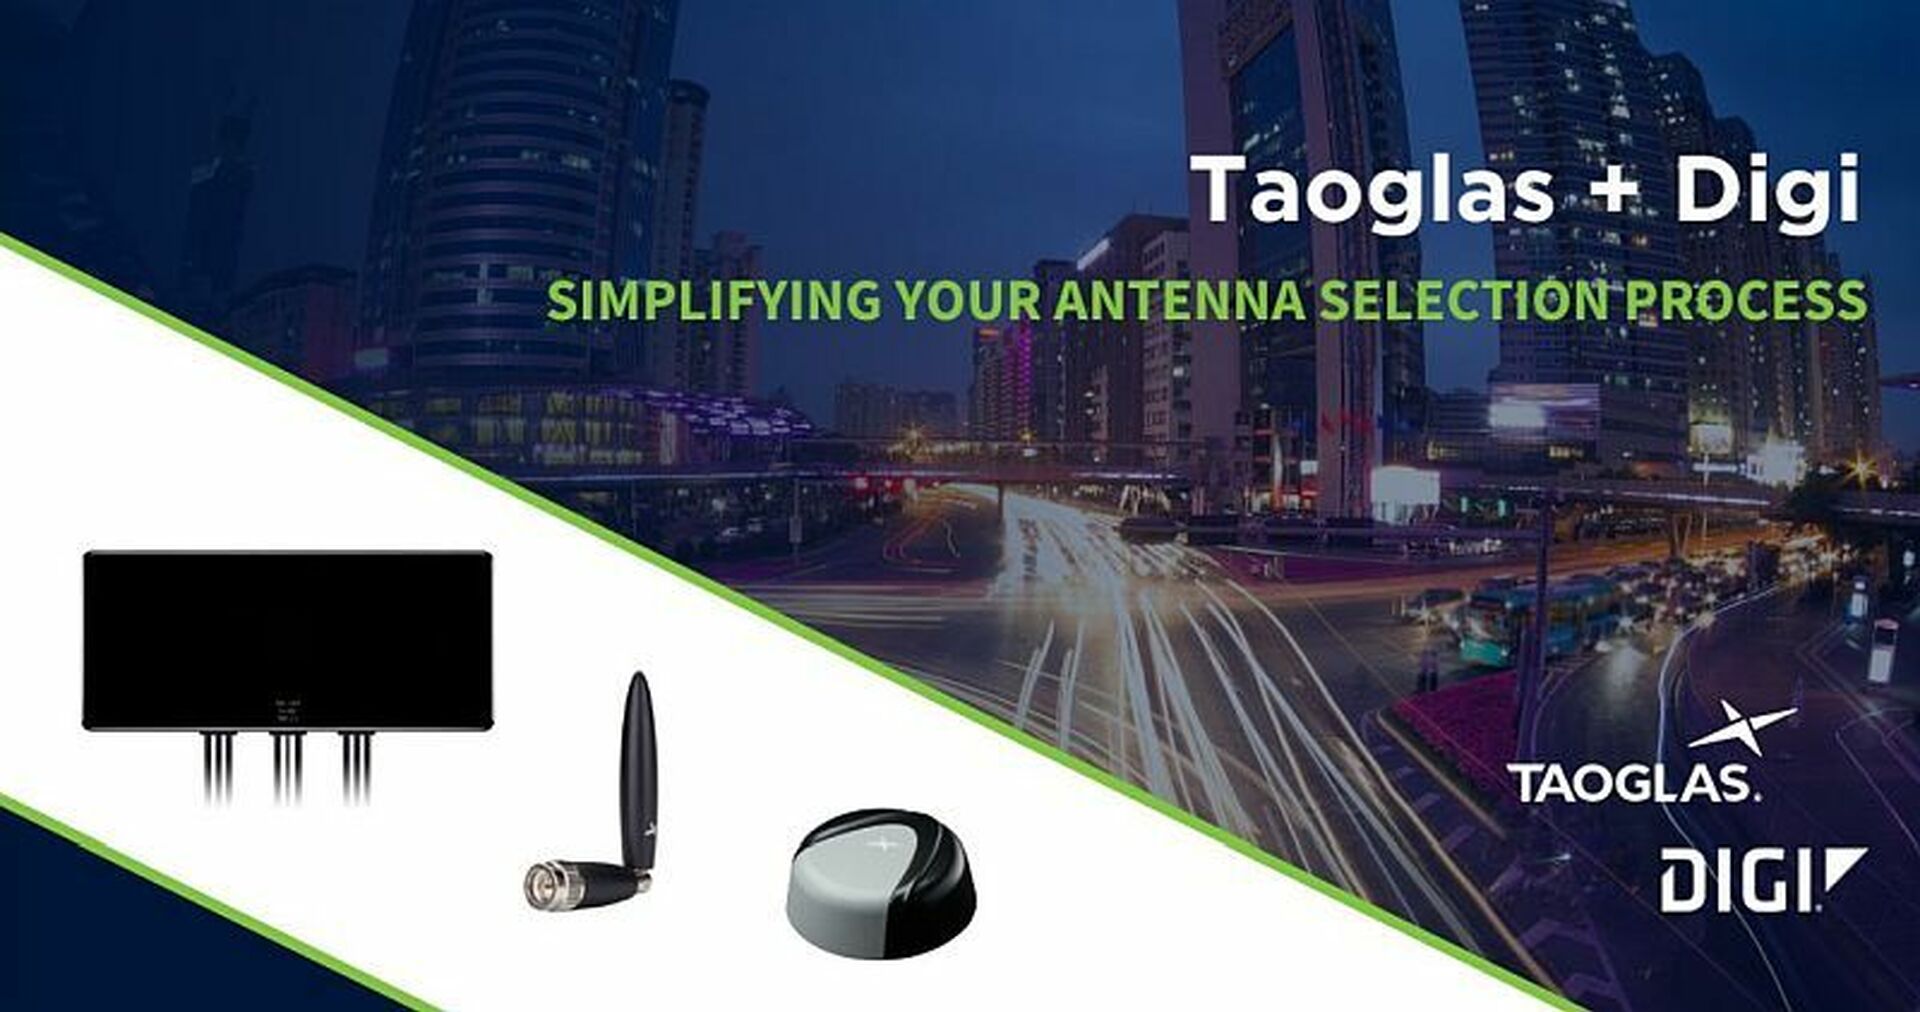 Taoglas and Digi antenna router